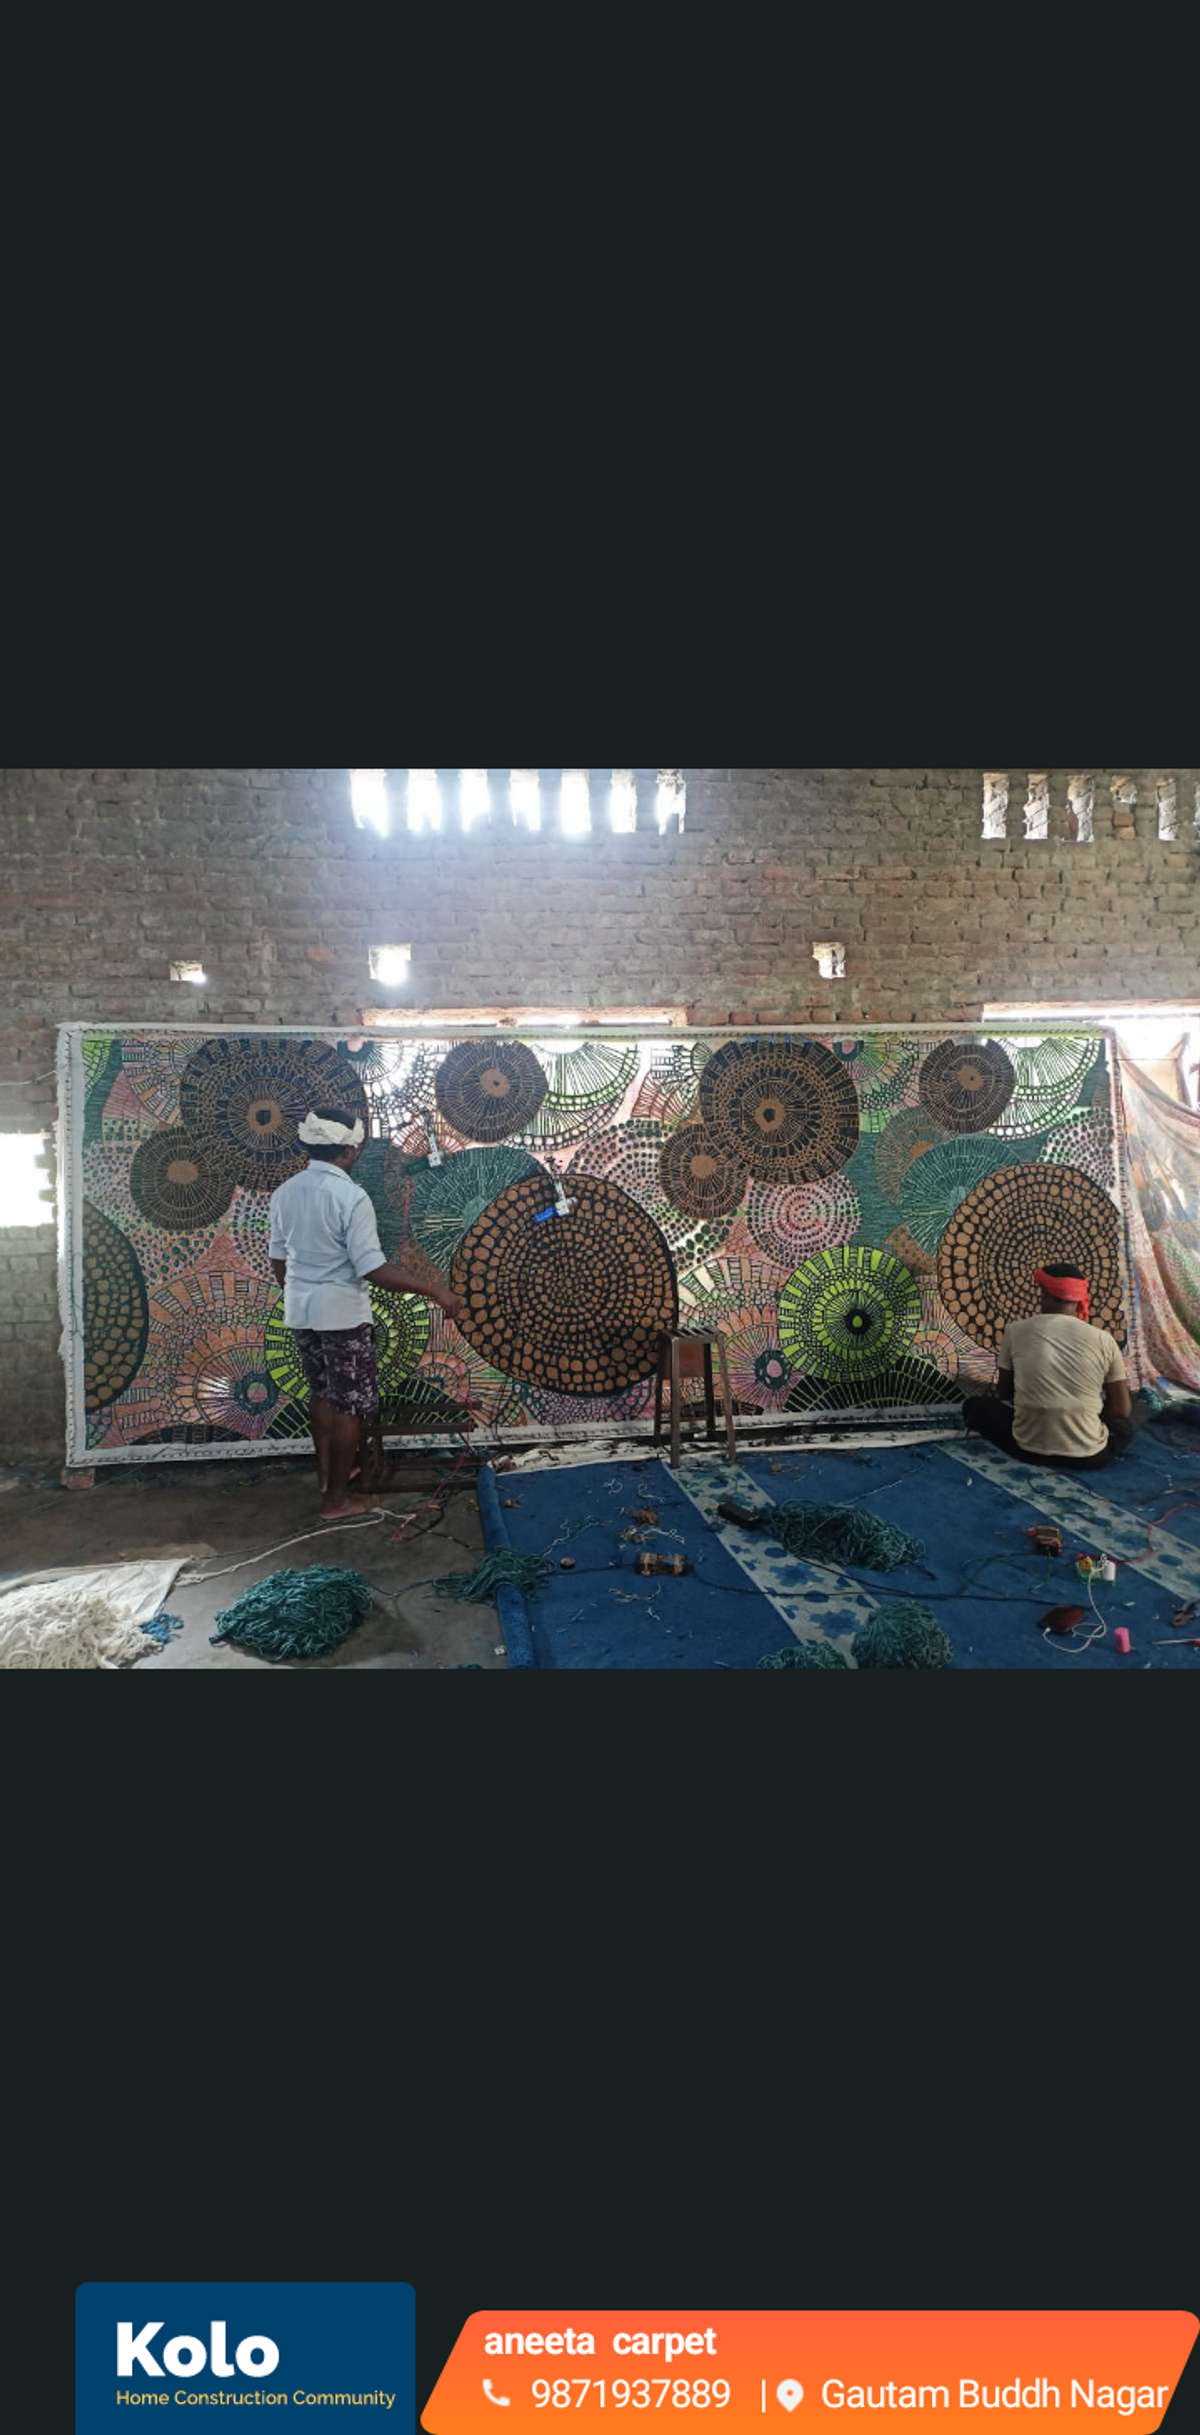 Designs by Flooring Aneeta carpet, Gautam Buddh Nagar | Kolo